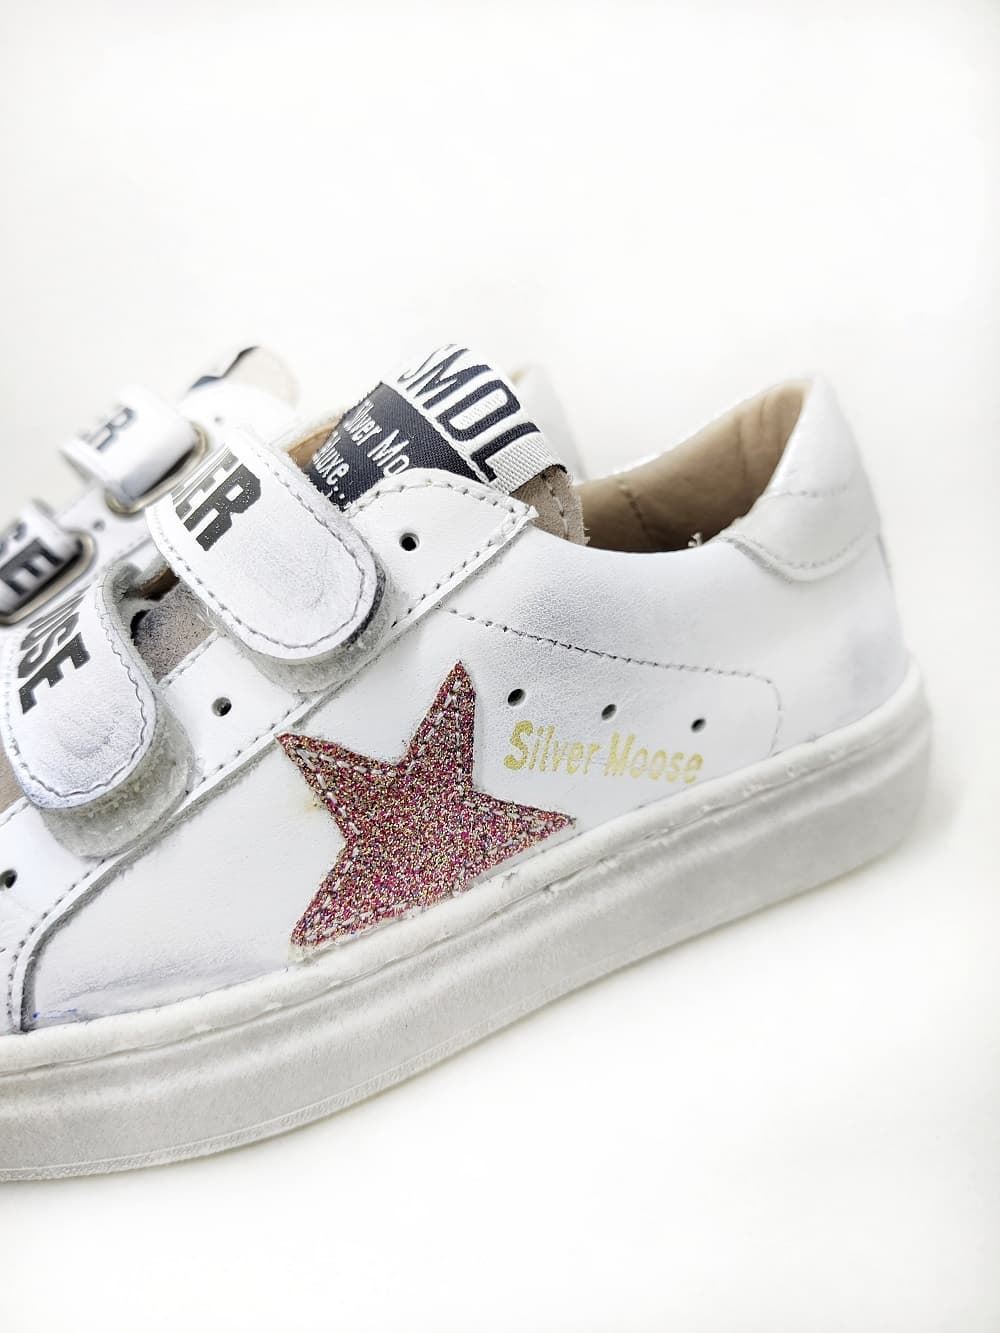 Sneakers Golden Star piel Blanco Rosa-Plata con Velcro Yowas - Imagen 4